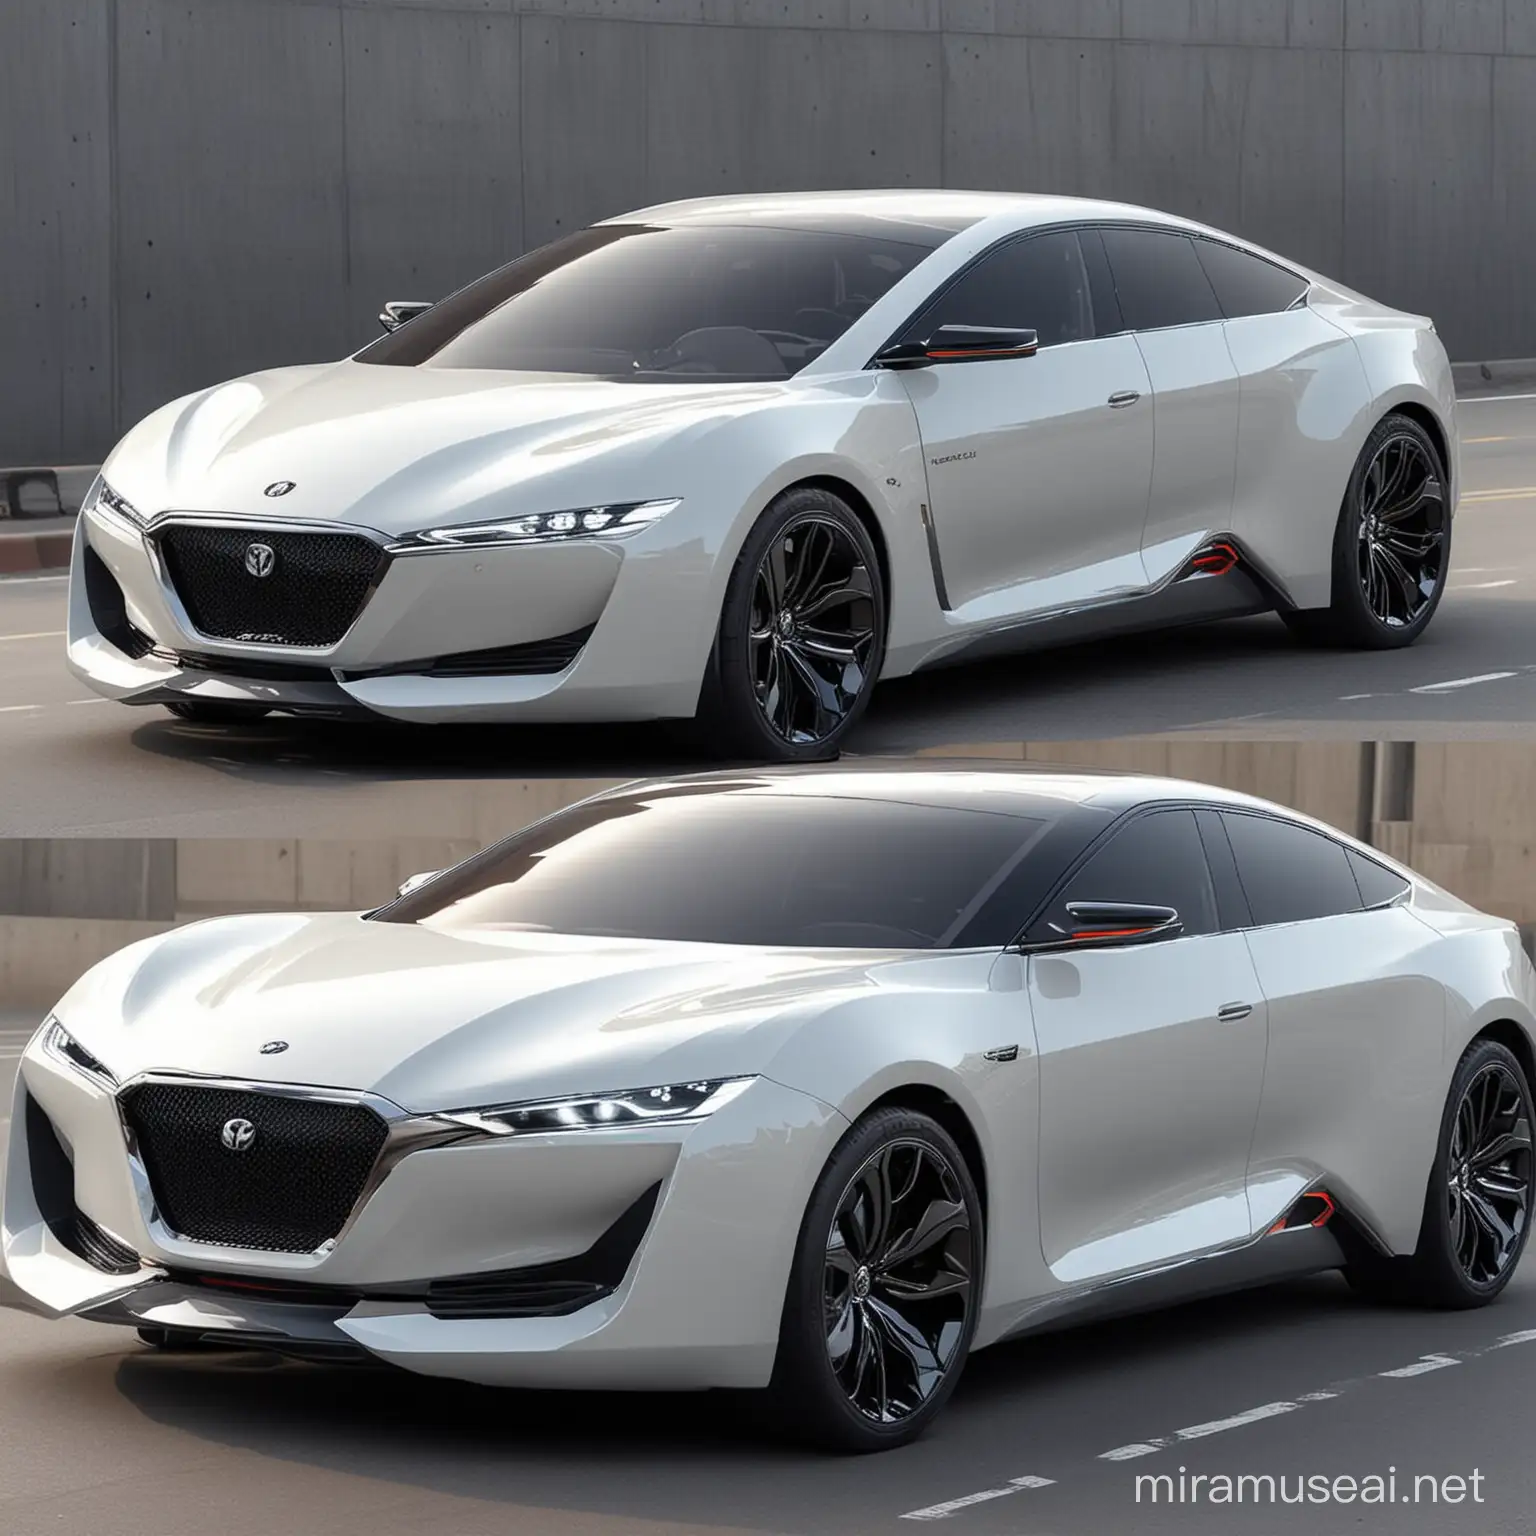 Futuristic Sedan Concept for 2030 by Hindustan Motors